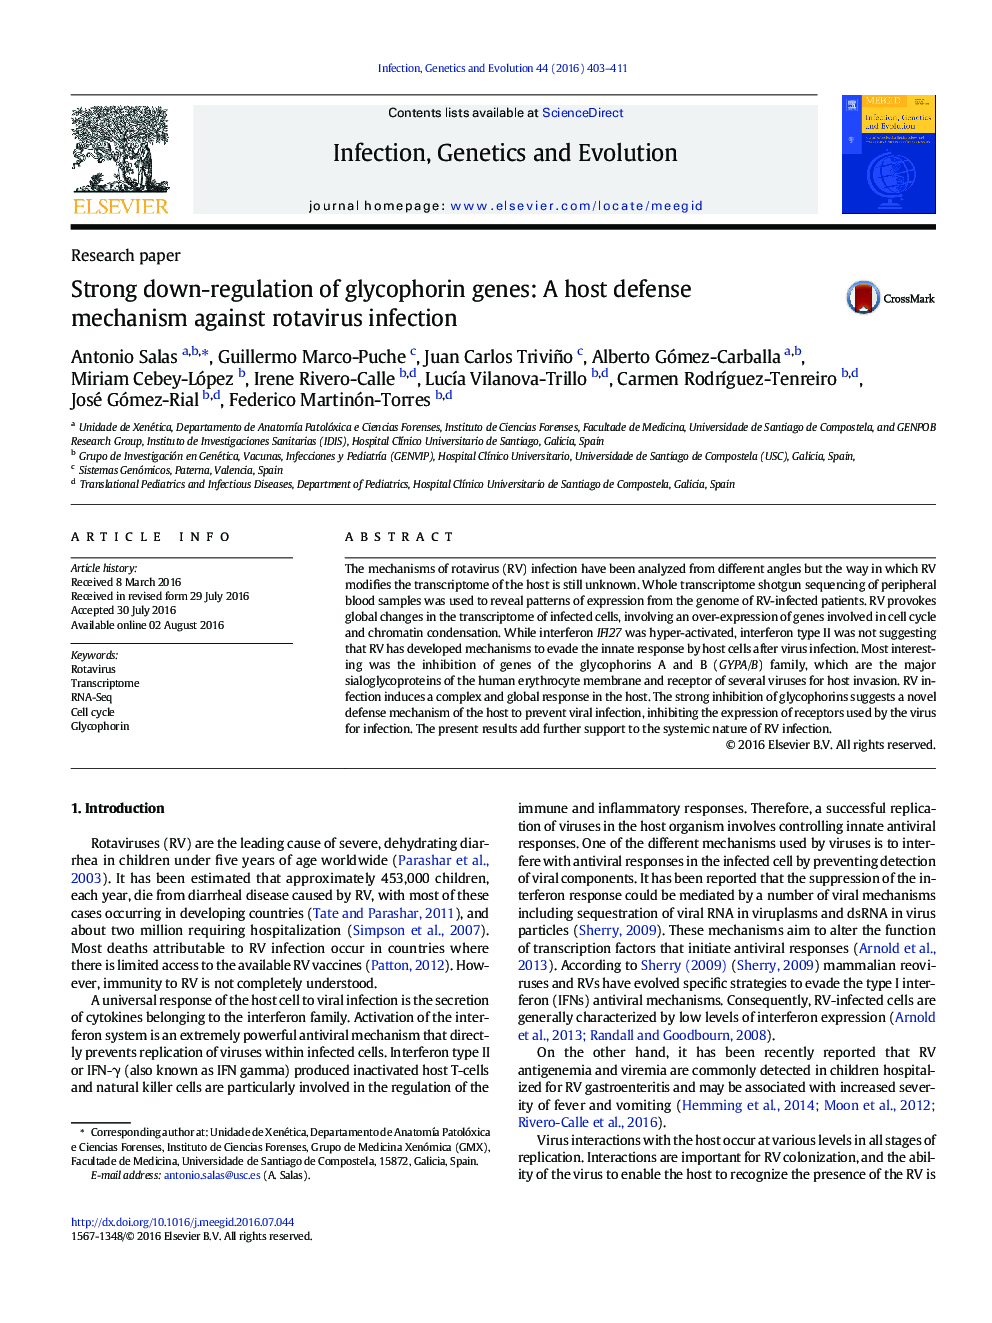 Strong down-regulation of glycophorin genes: A host defense mechanism against rotavirus infection